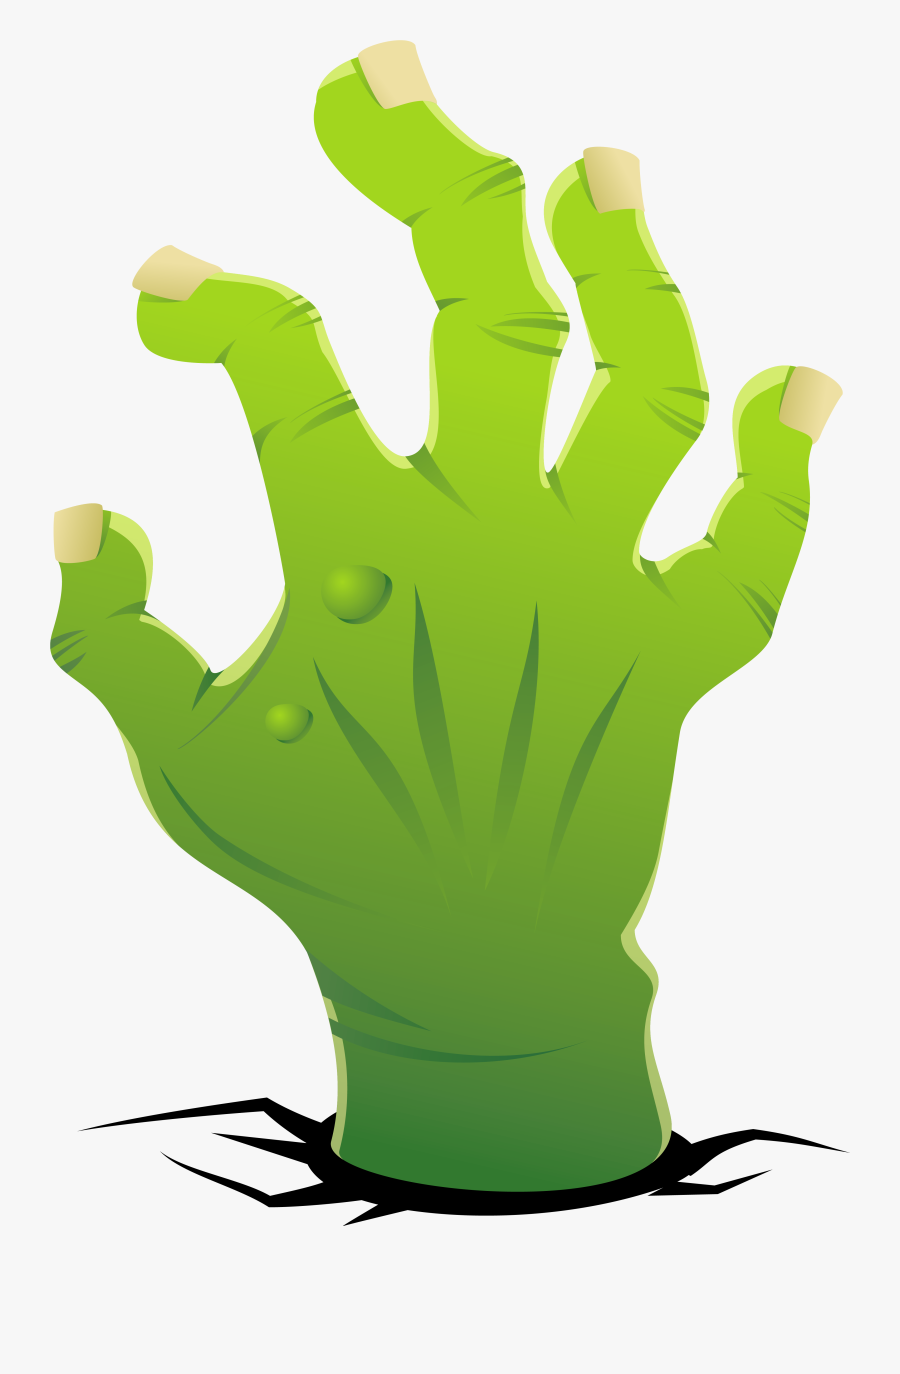 Zombie Hand Clipart Image - Zombie Hand Clipart, Transparent Clipart